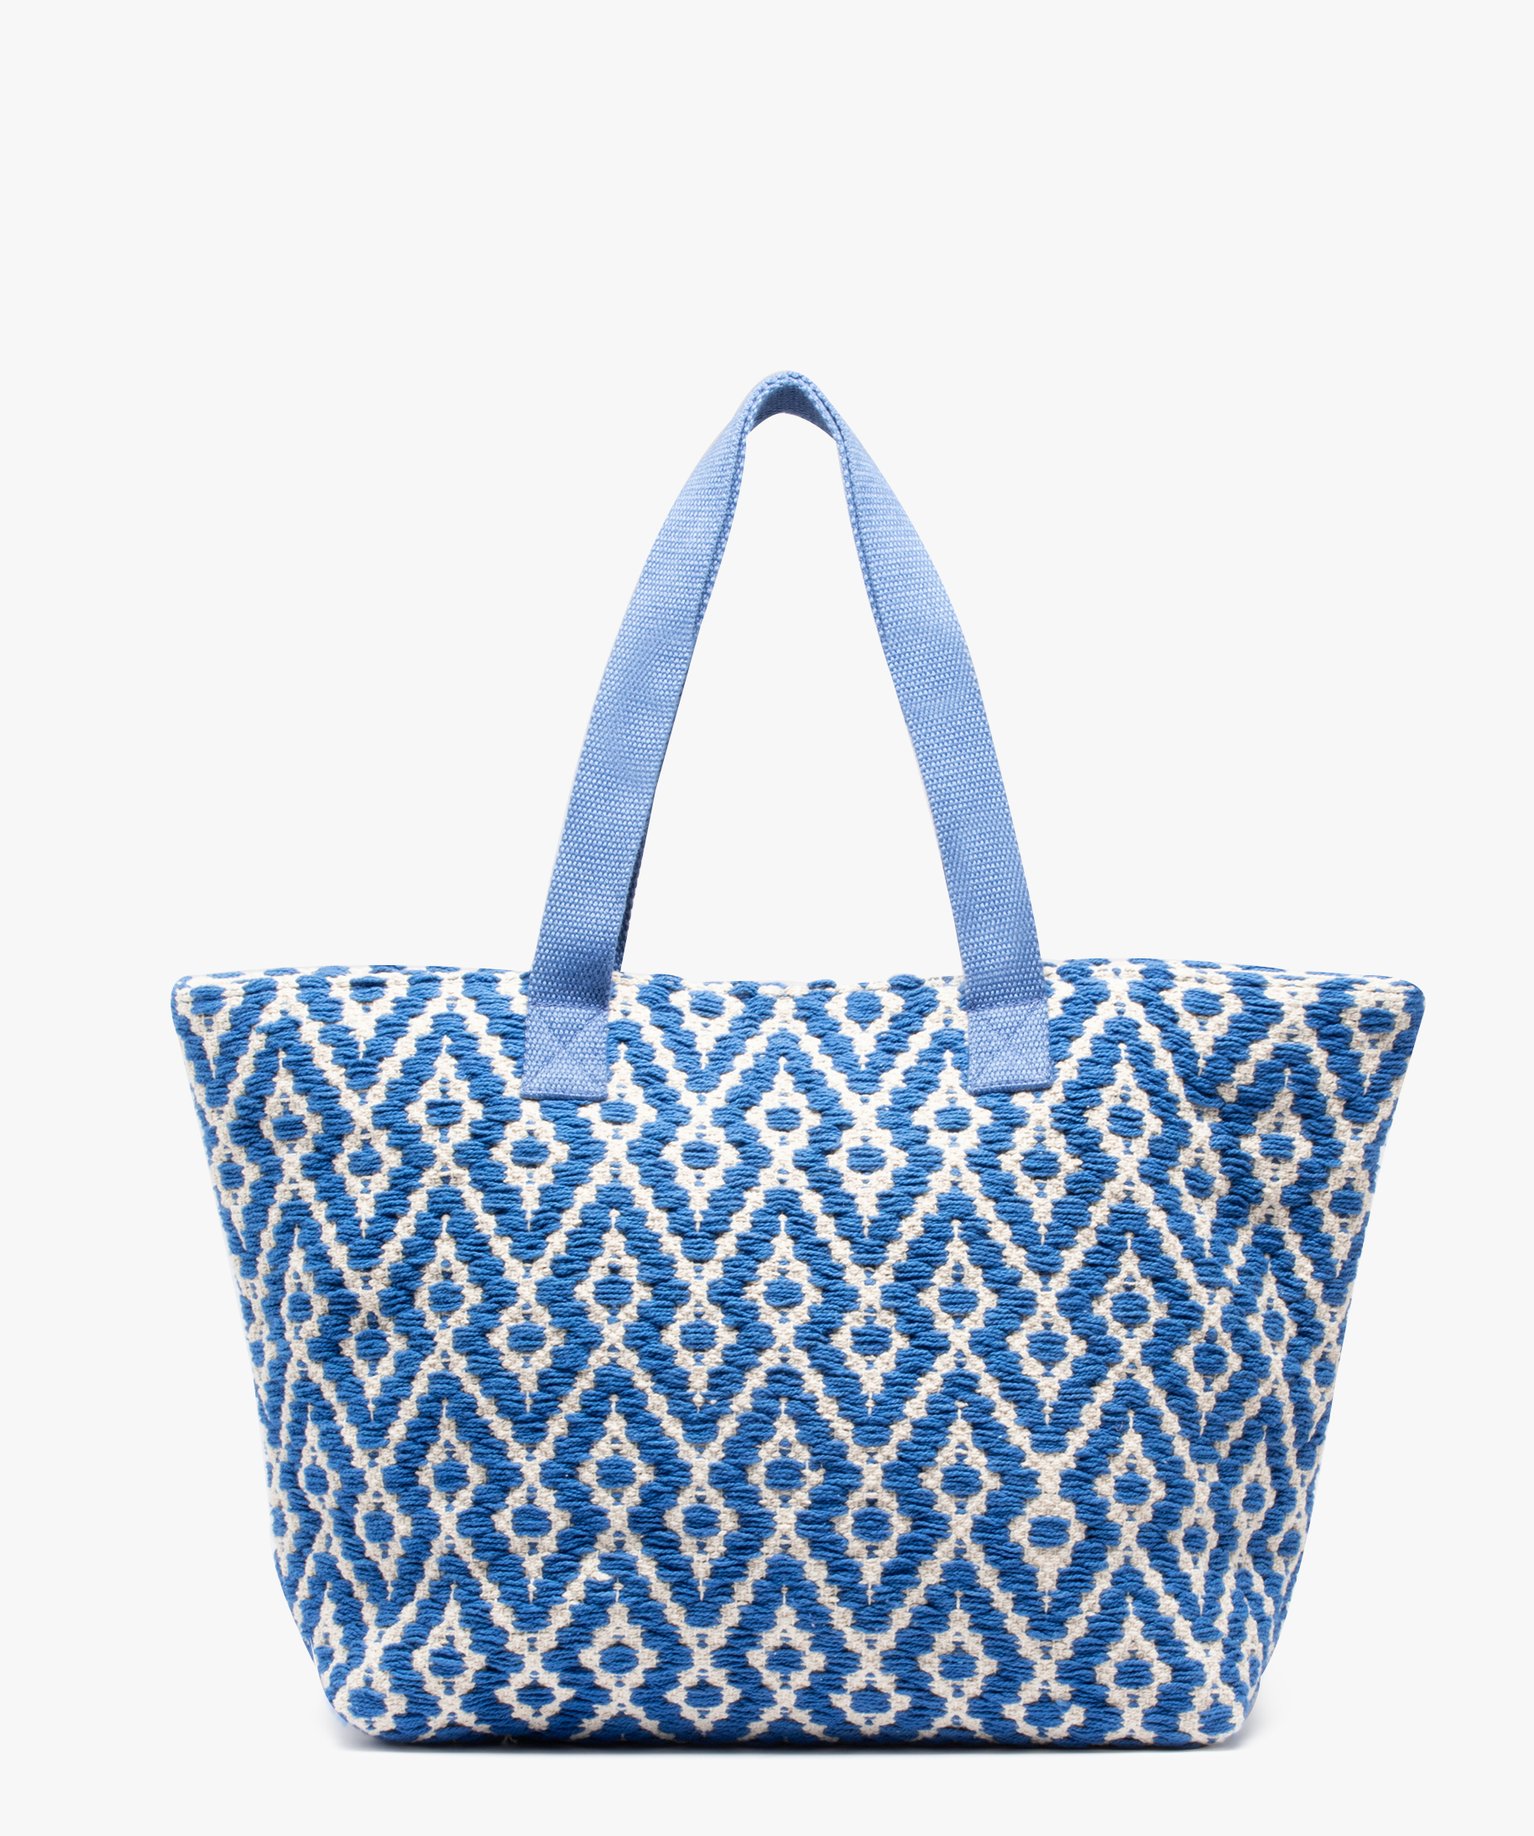 sac cabas femme en toile tissee grand format bleu sacs a main